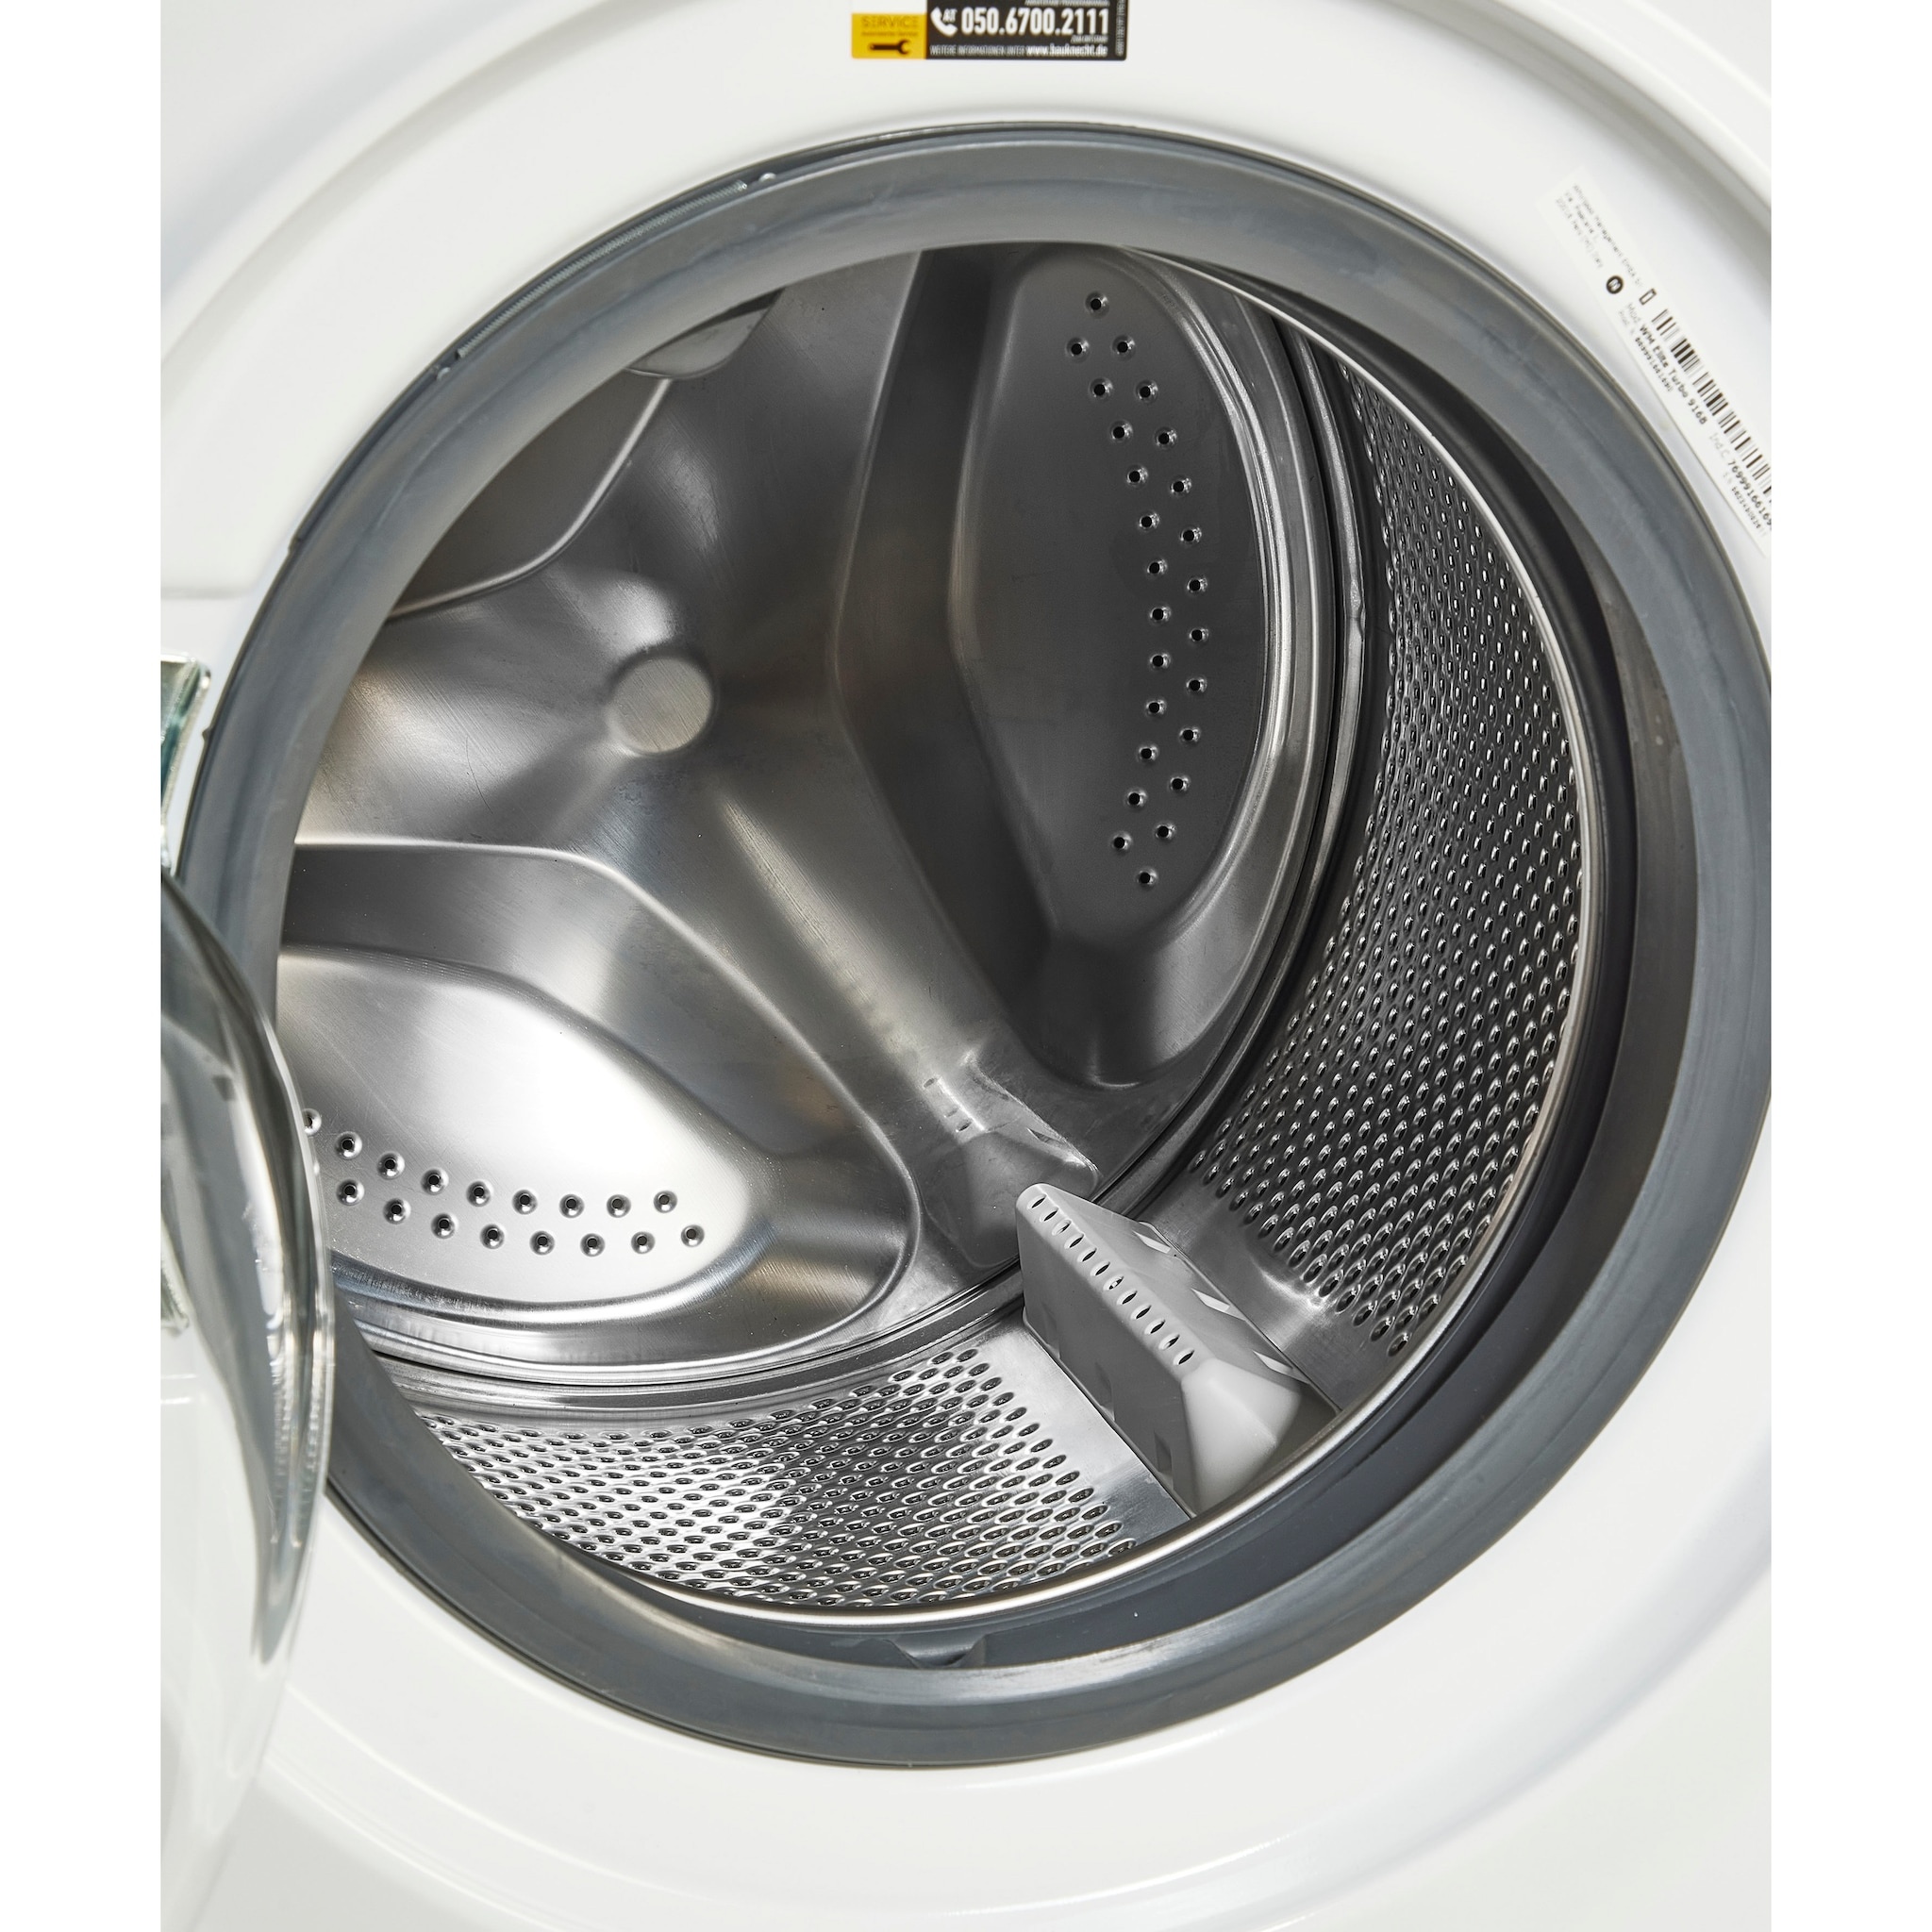 WM Elite Turbo 916B kg toeren wasmachine - Hermans Trading Outlet